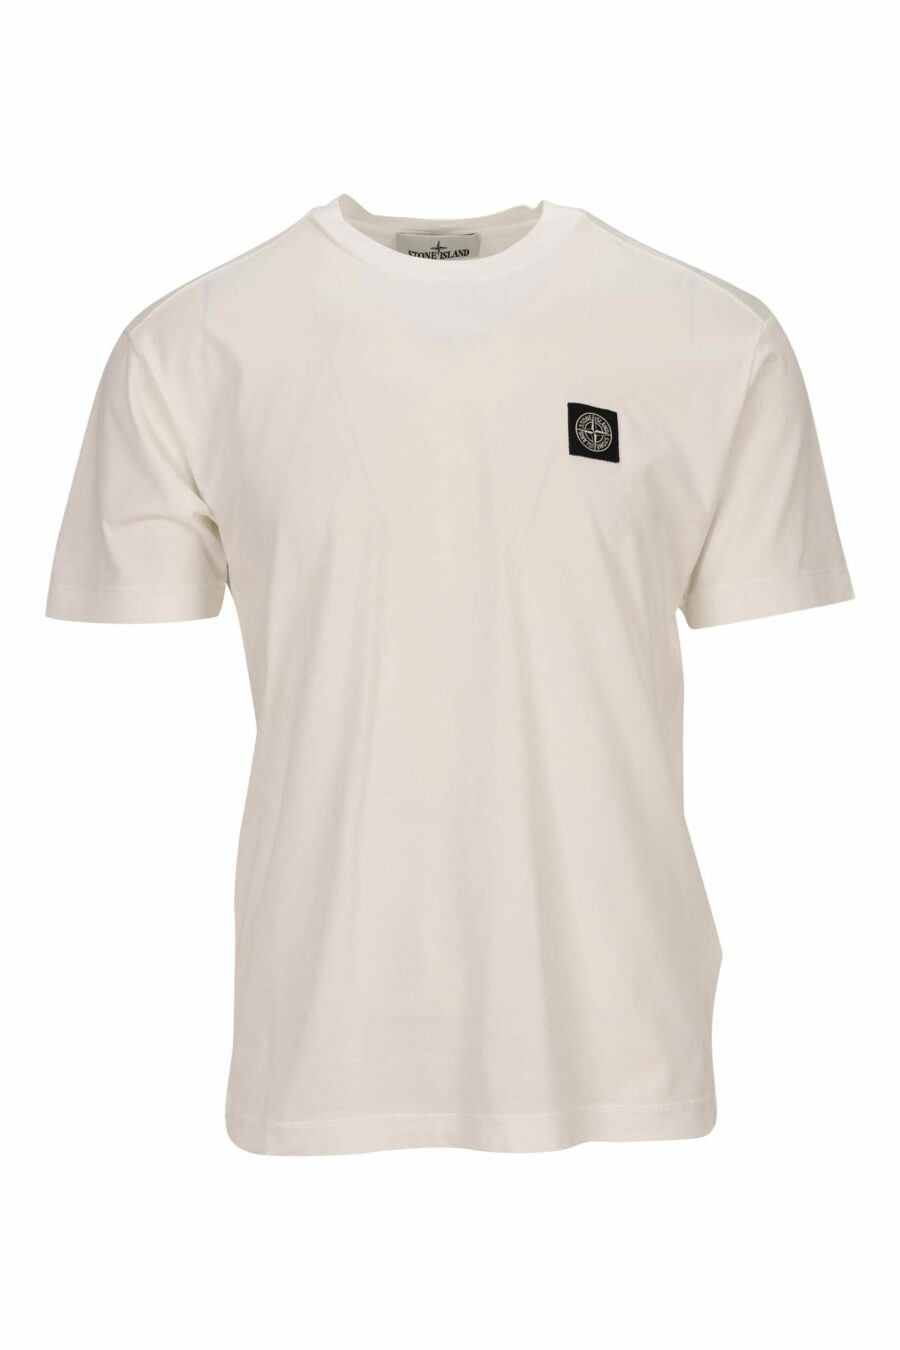 Camiseta blanca con minilogo parche brújula - 8052572855146 scaled